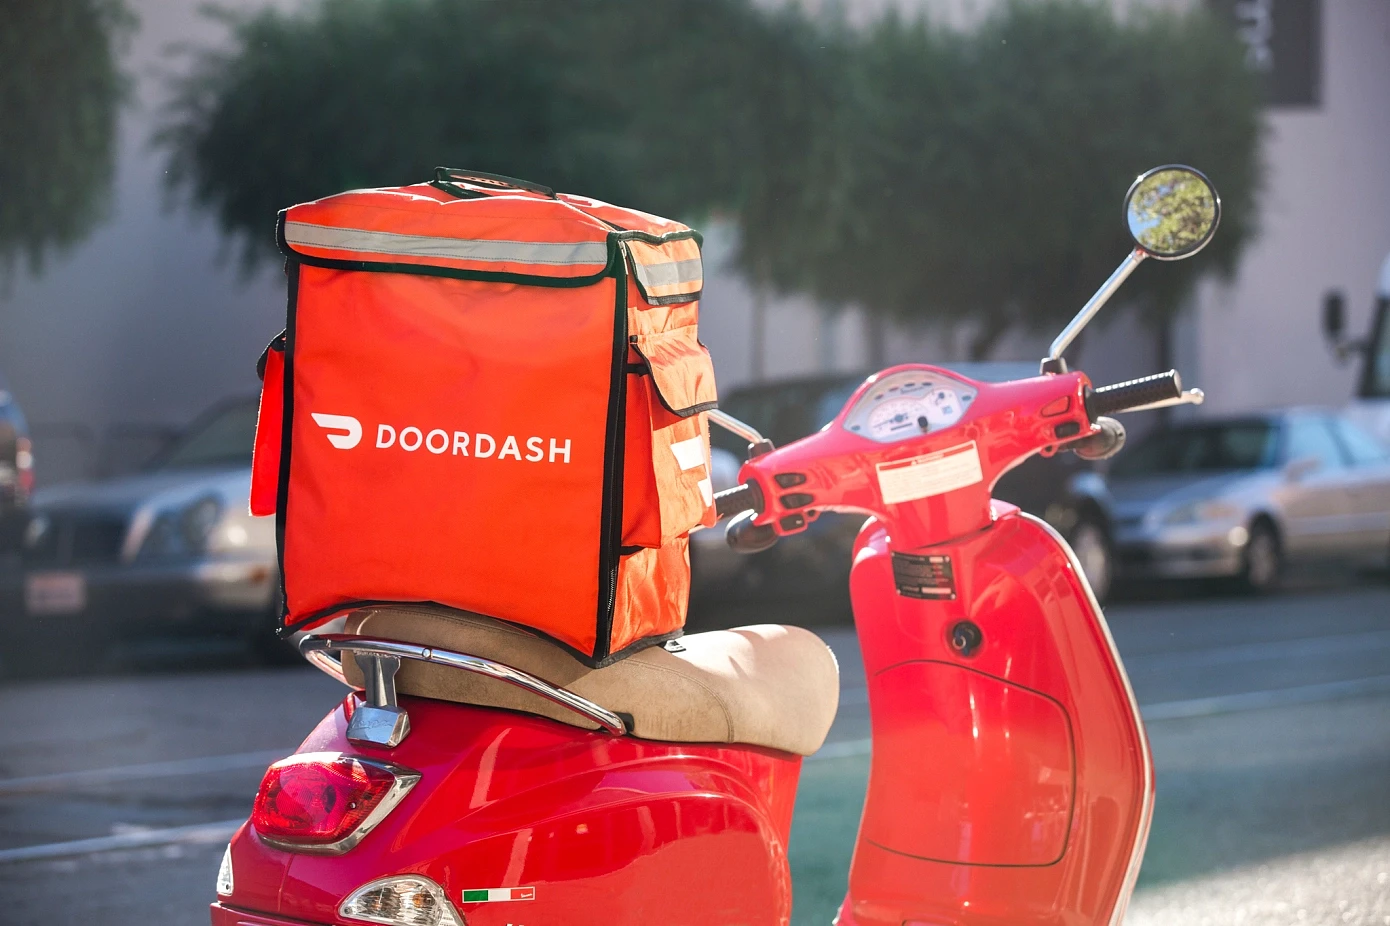 DoorDash将要求所有员工送外卖或做其他零工经济工作 引发不满 - 1